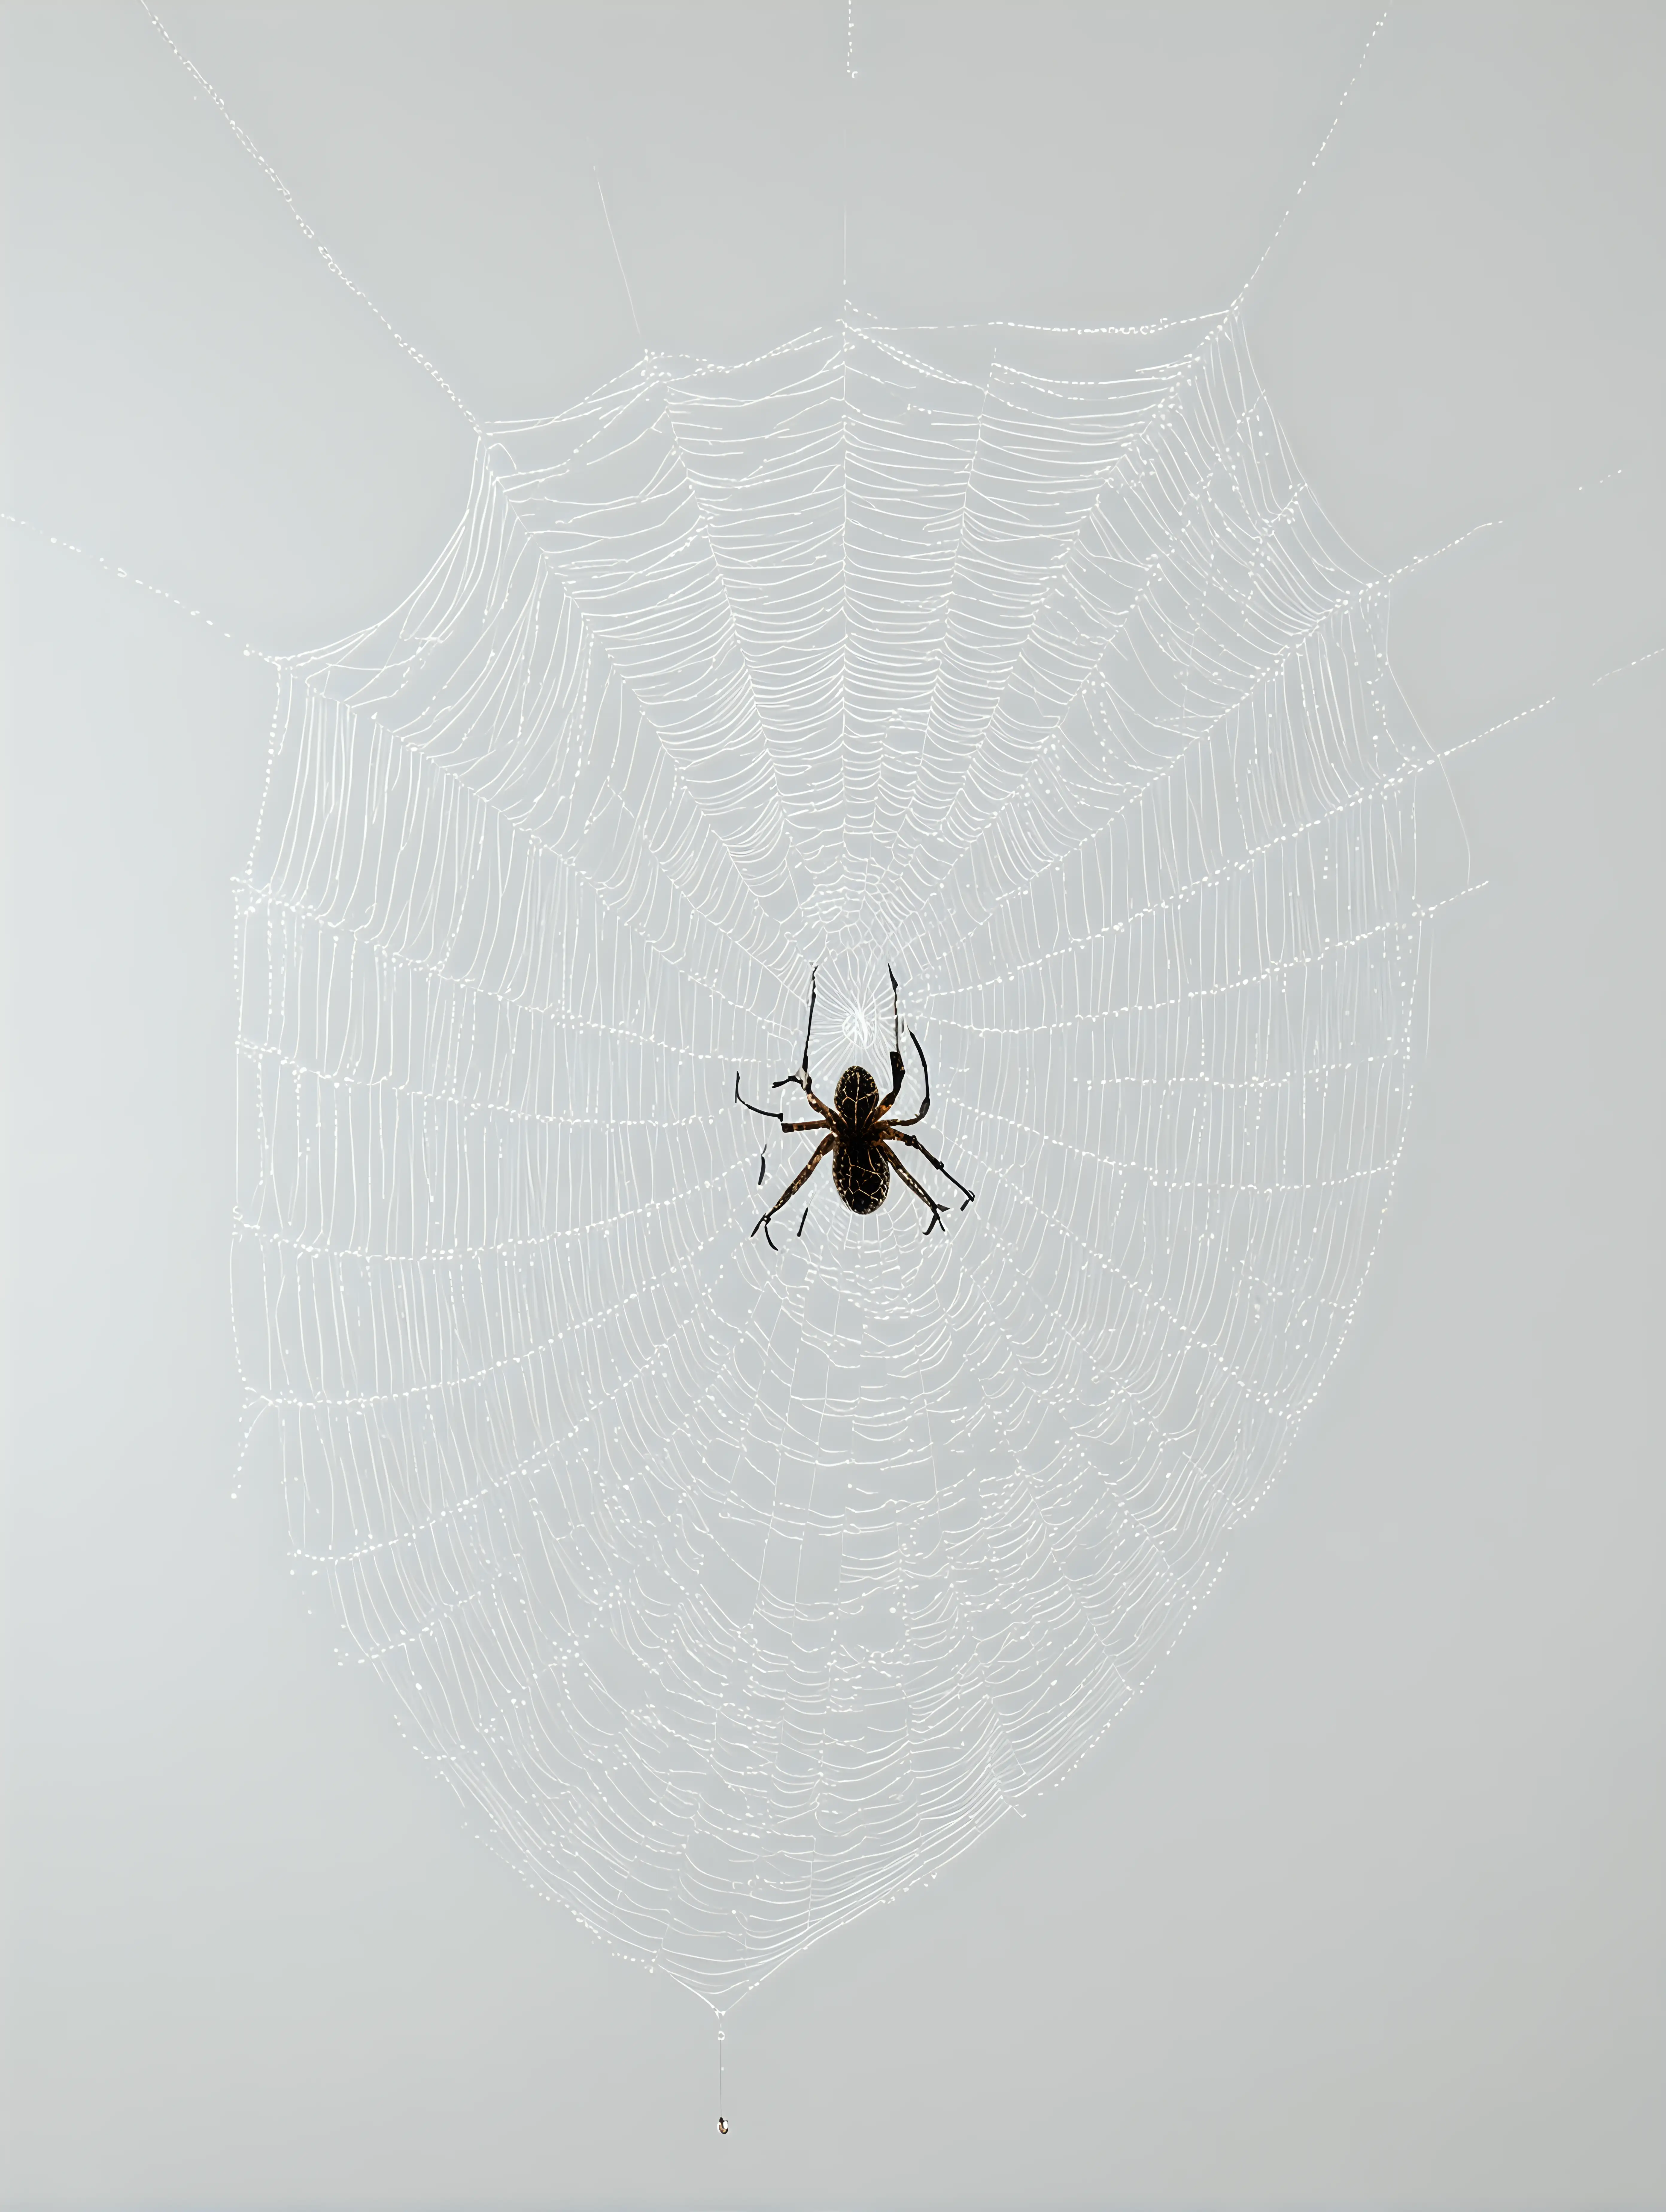 Intricate Spiderweb Design on Clean White Background